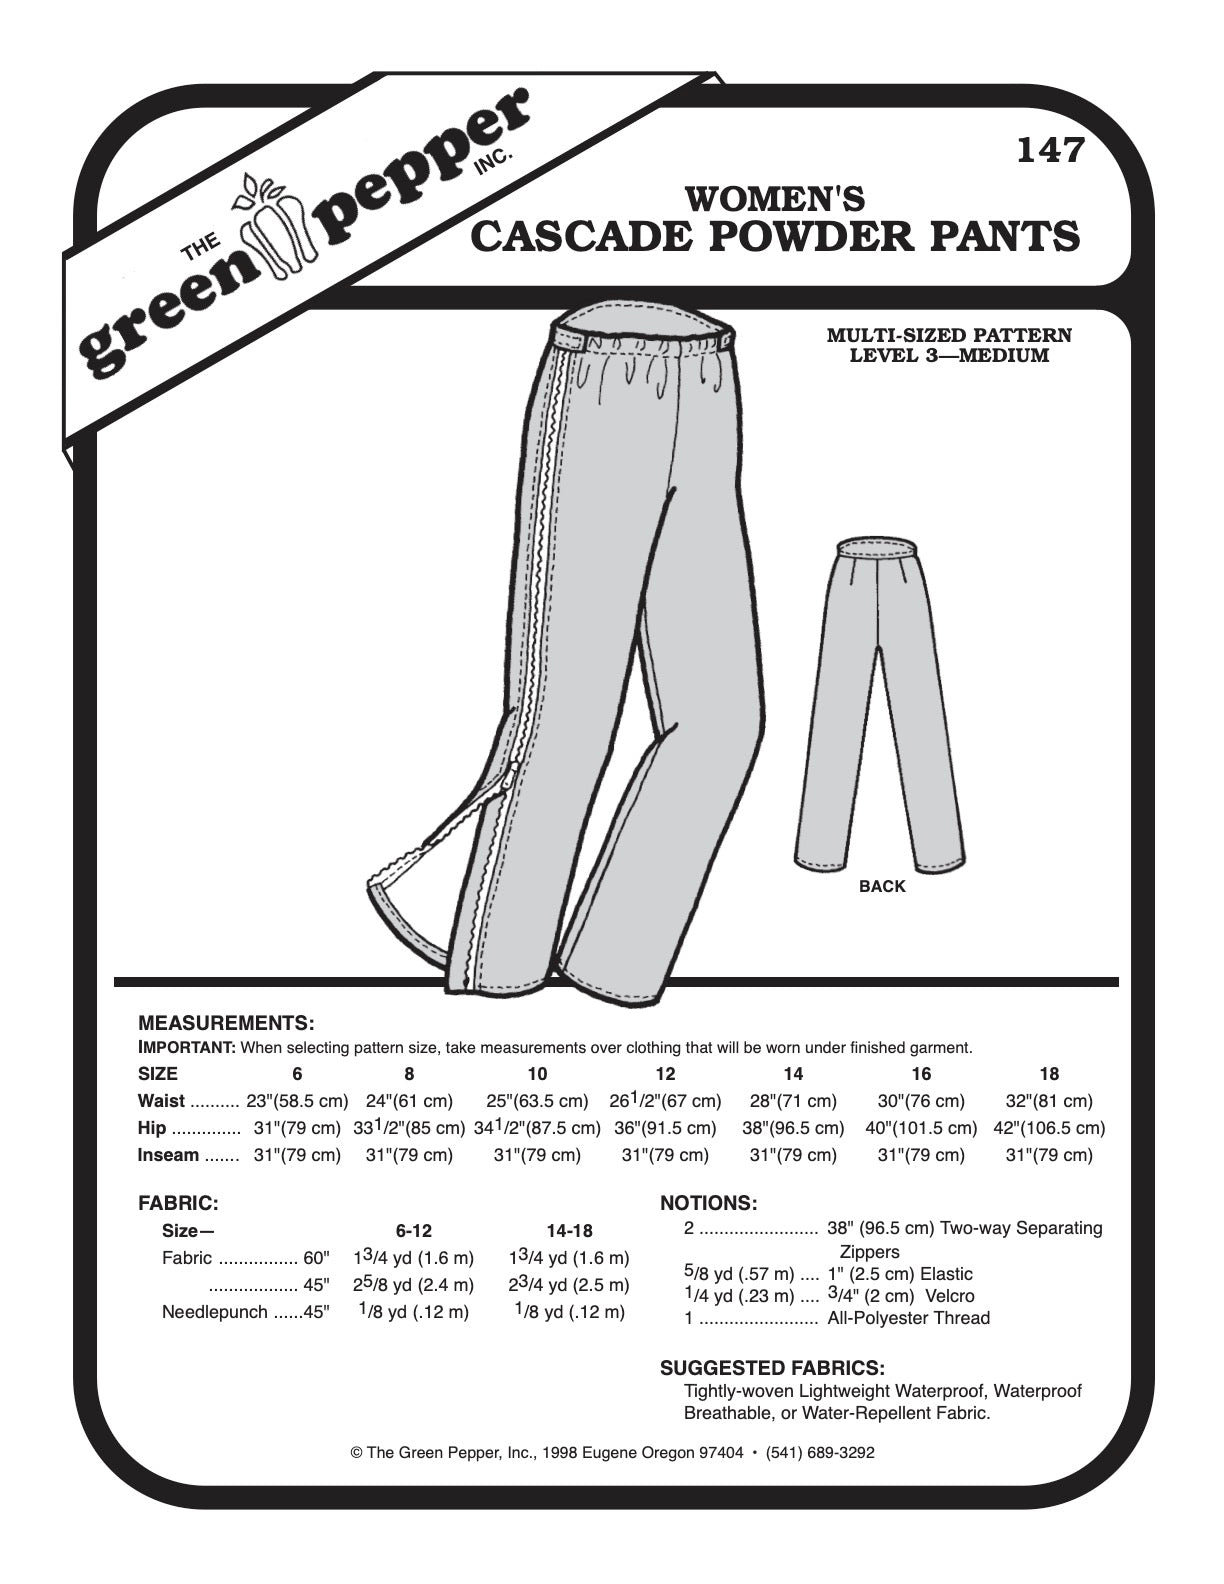 Women’s Cascade Powder Pants Pattern - 147 - The Green Pepper Patterns